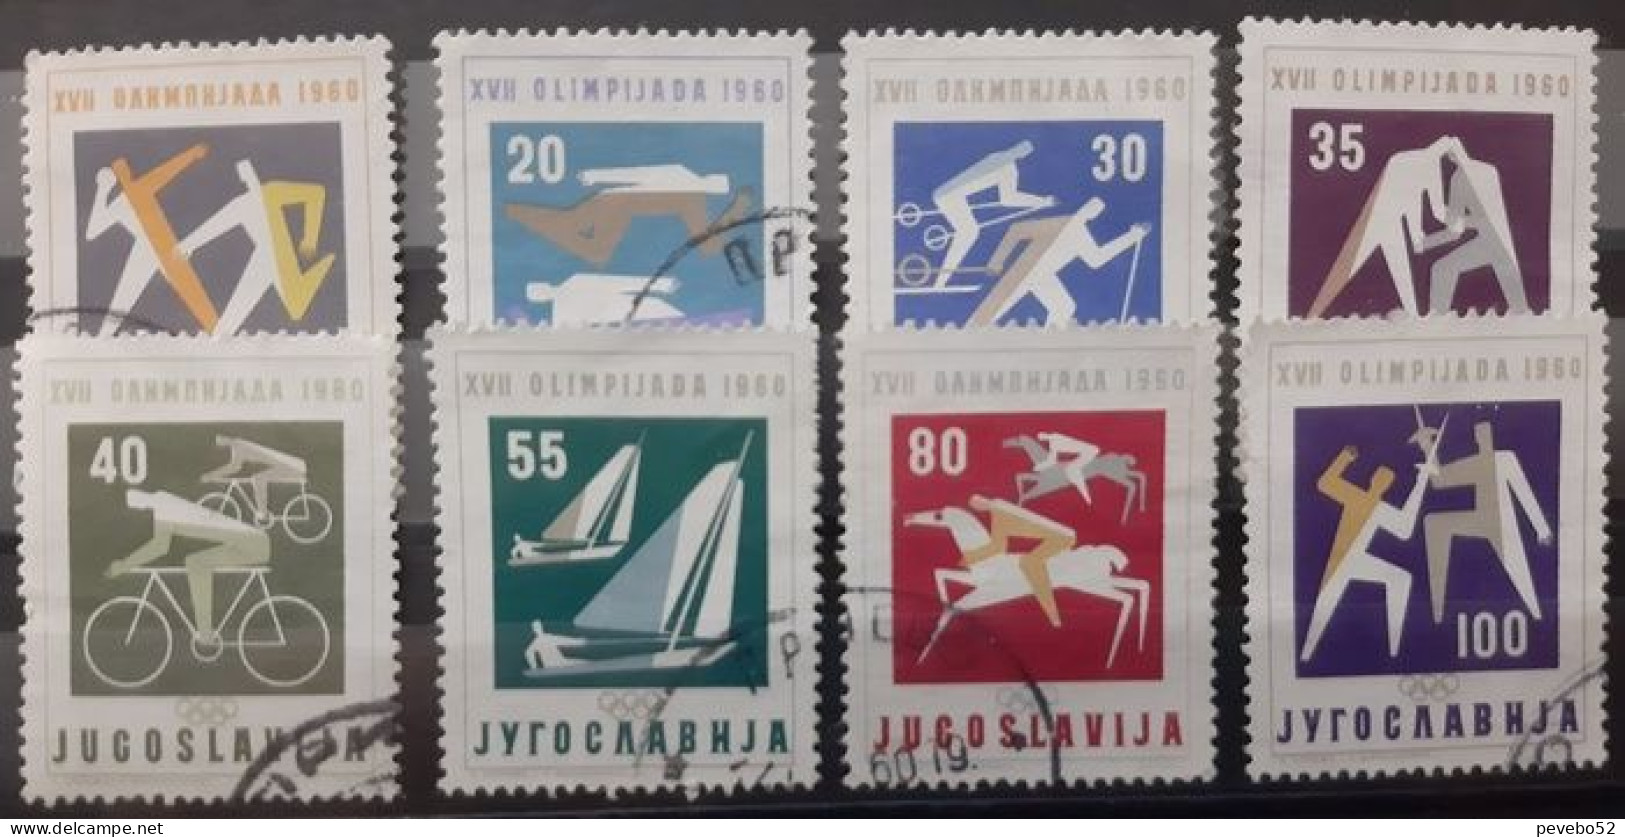 YUGOSLAVIA 1960 - Olympic Games - Rome, Italy USED - Usati